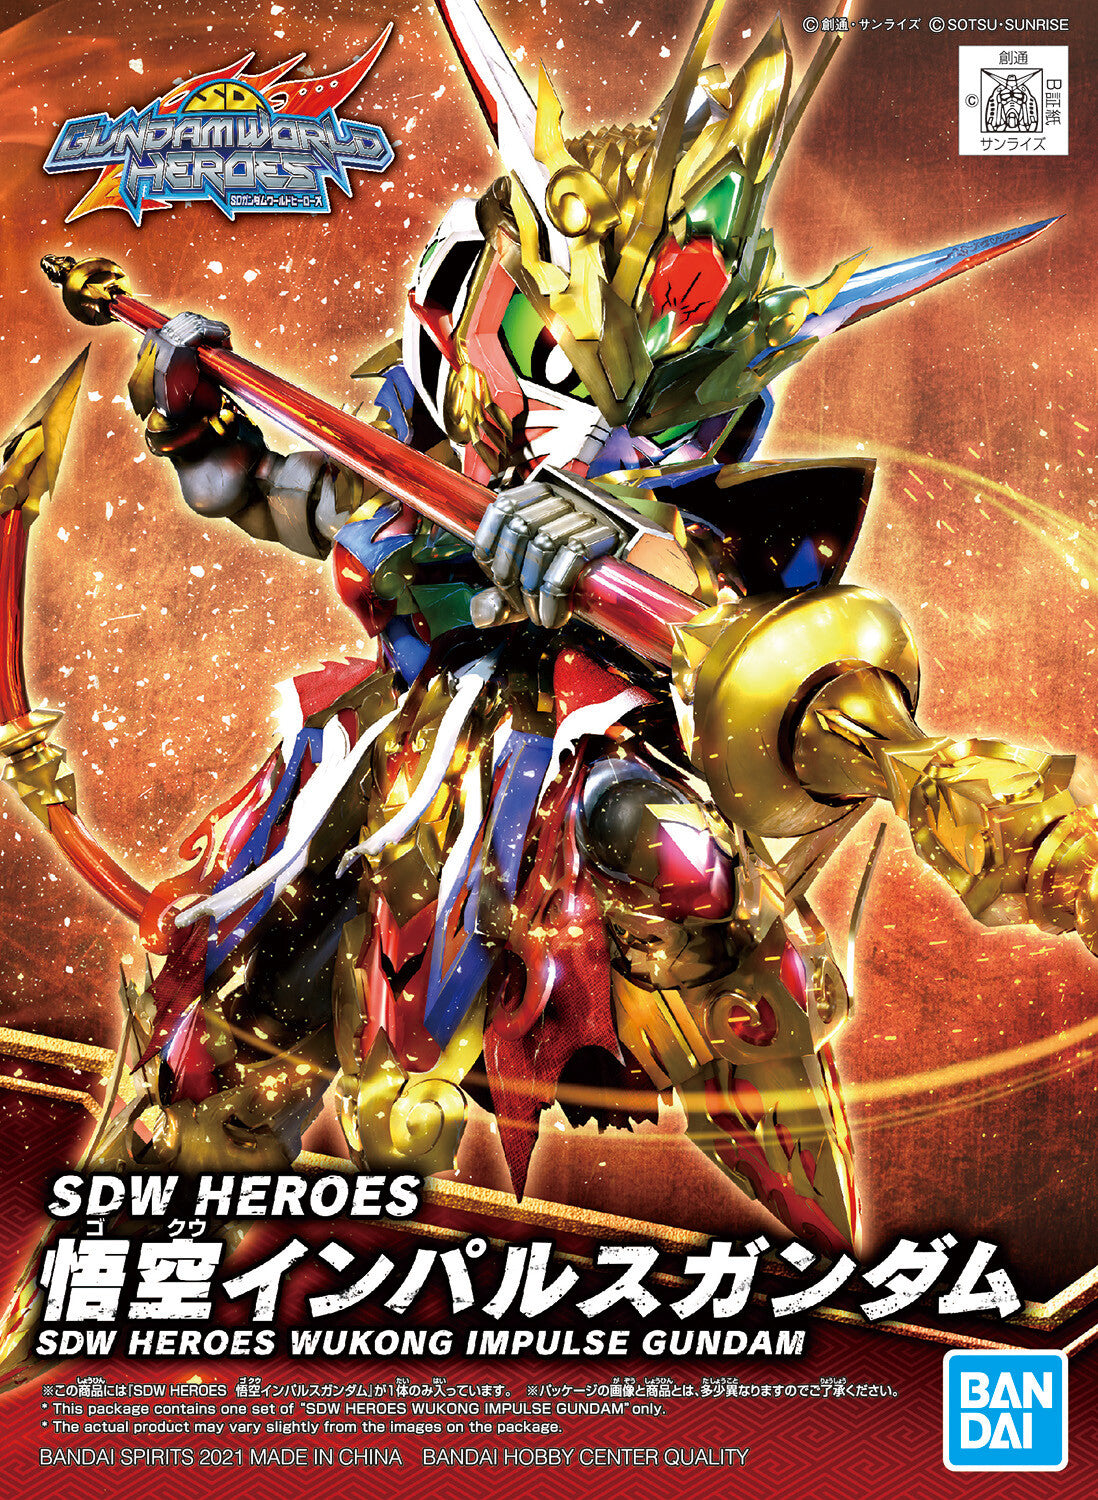 SD World Heroes - Wukong Impulse Gundam